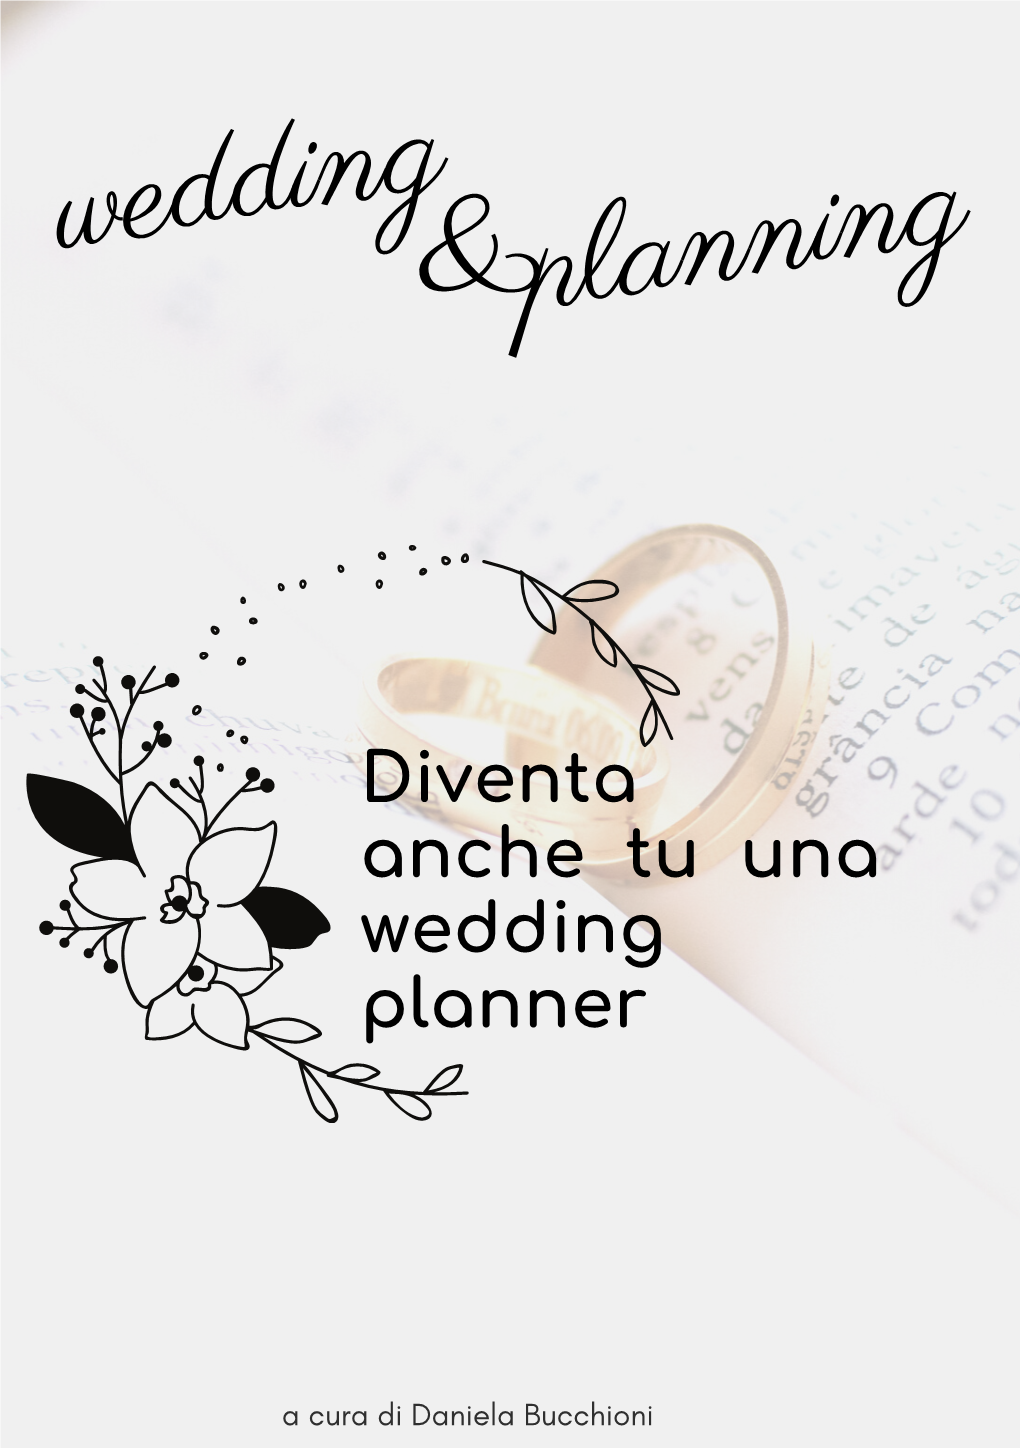 Wedding &Planning